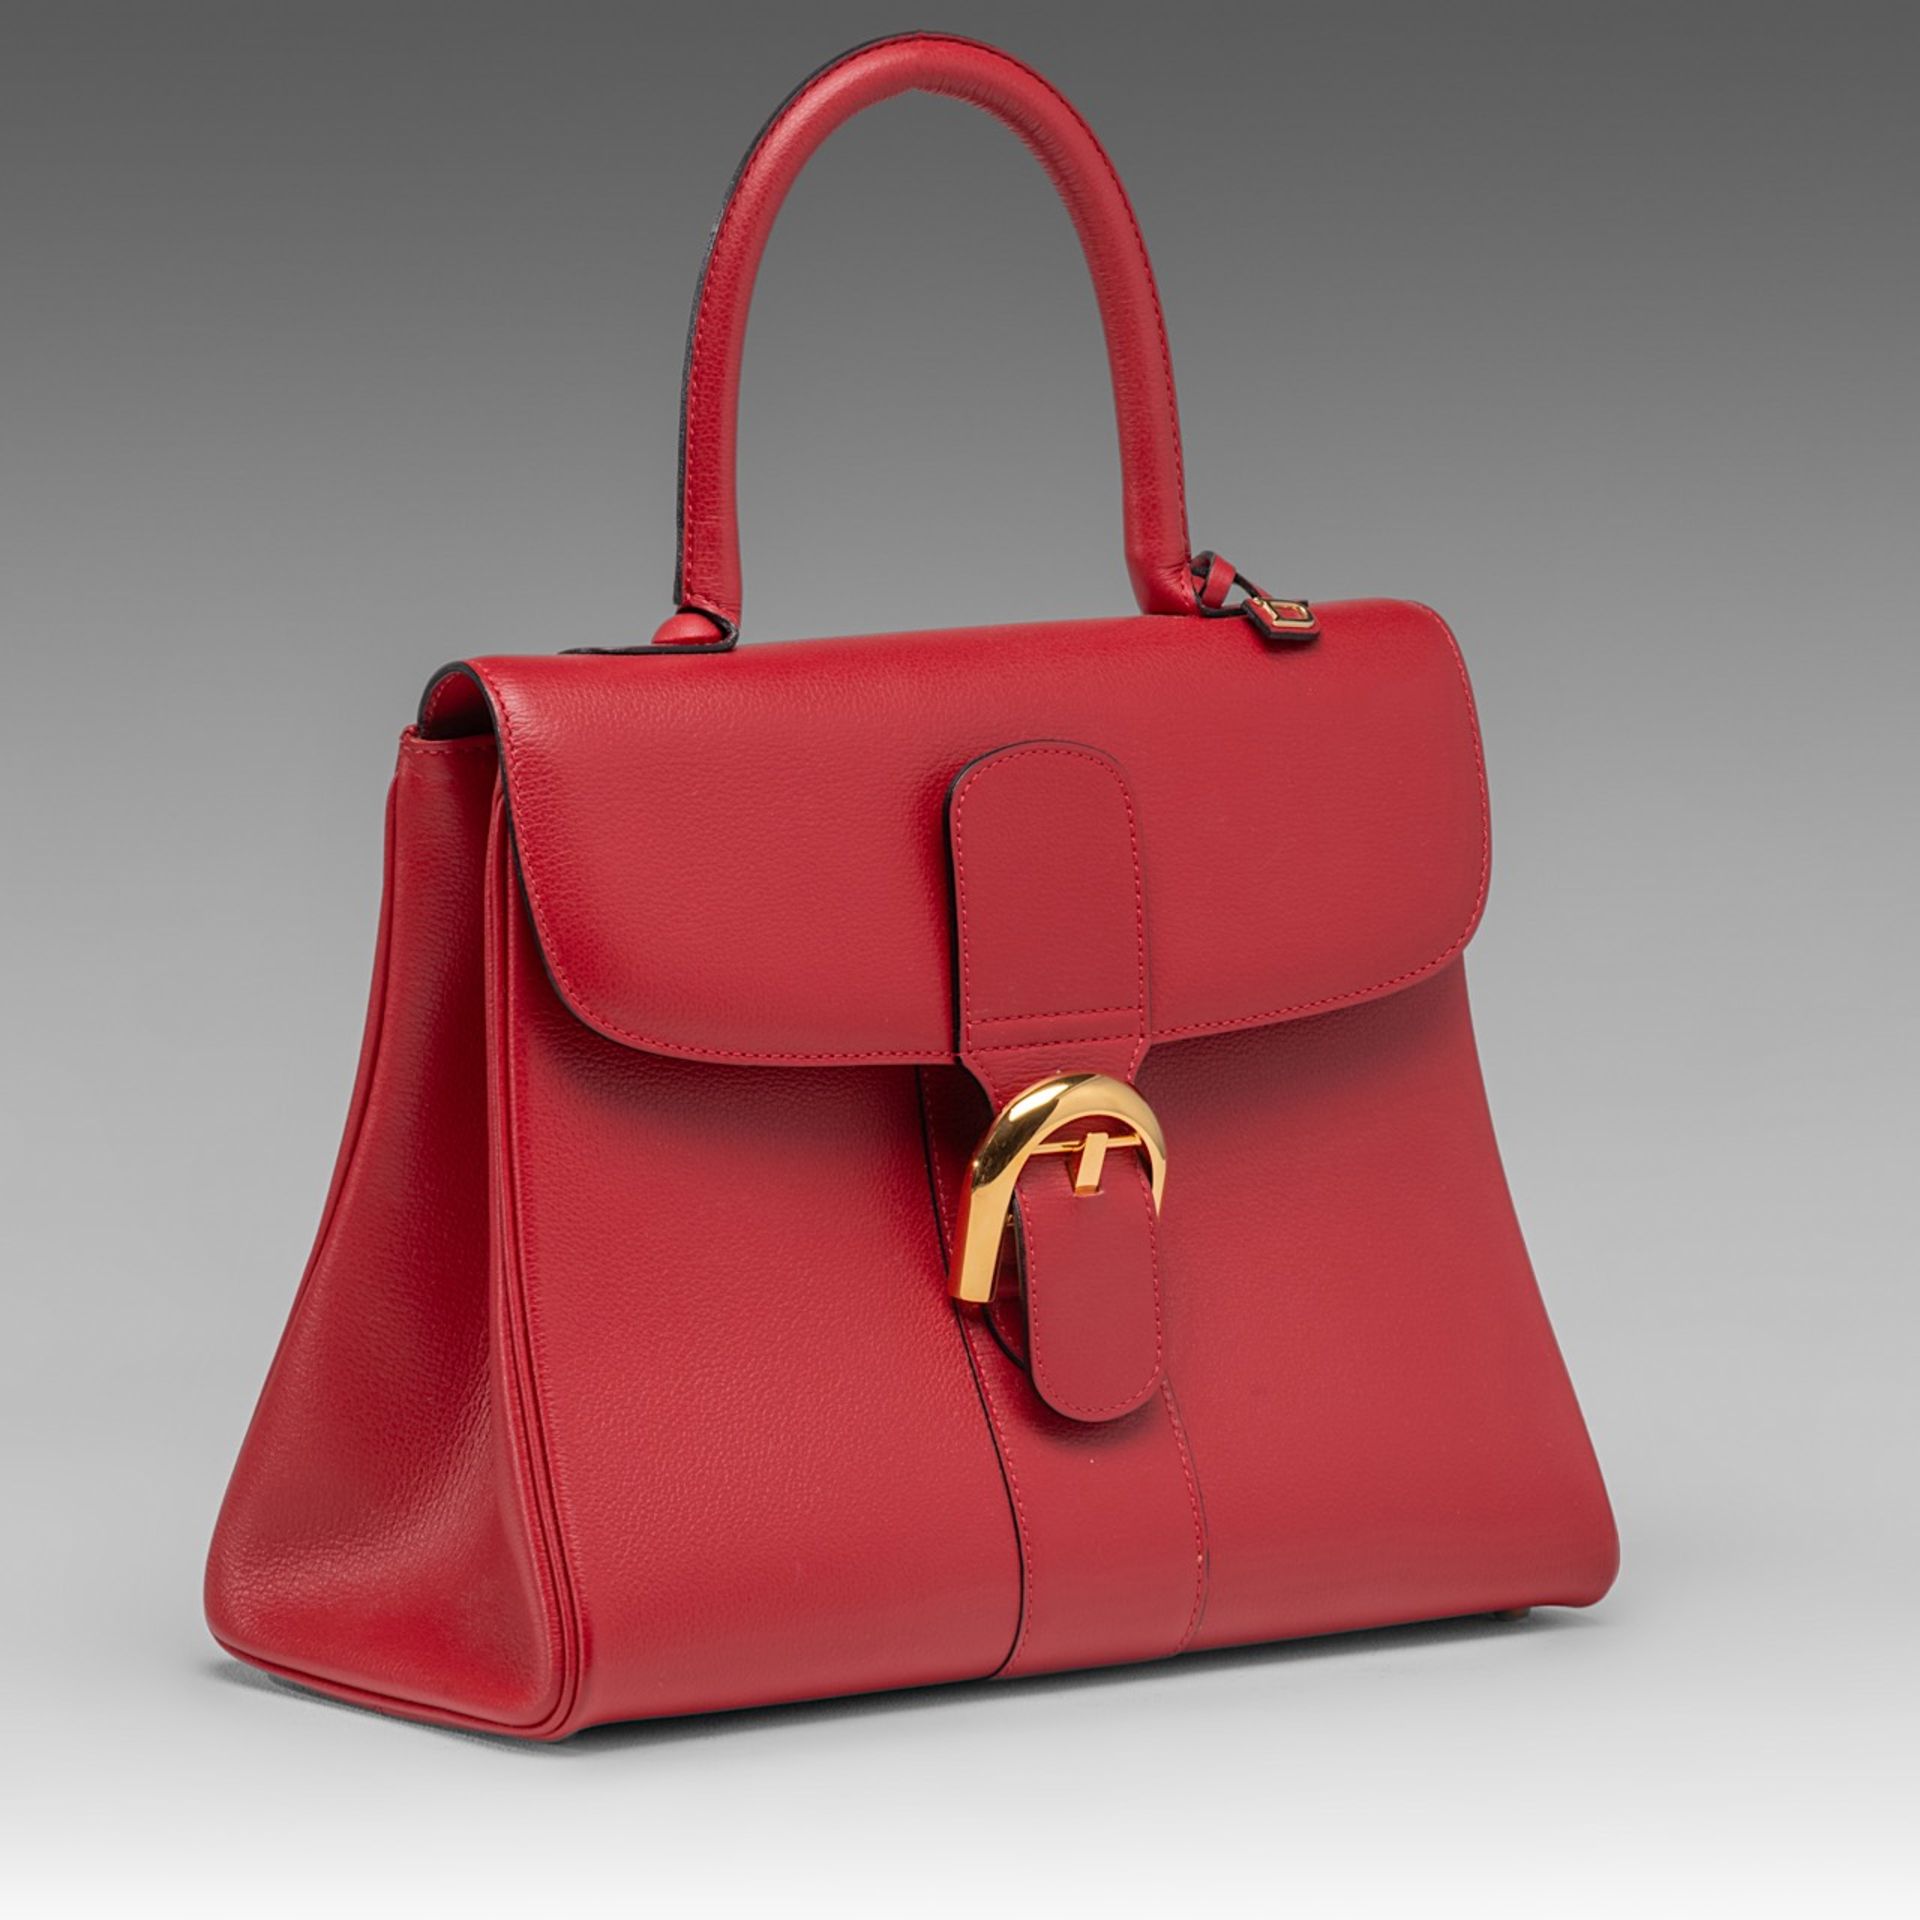 A Delvaux Brillant MM red leather handbag, H 21,5 - W 29 - D 13,5 cm